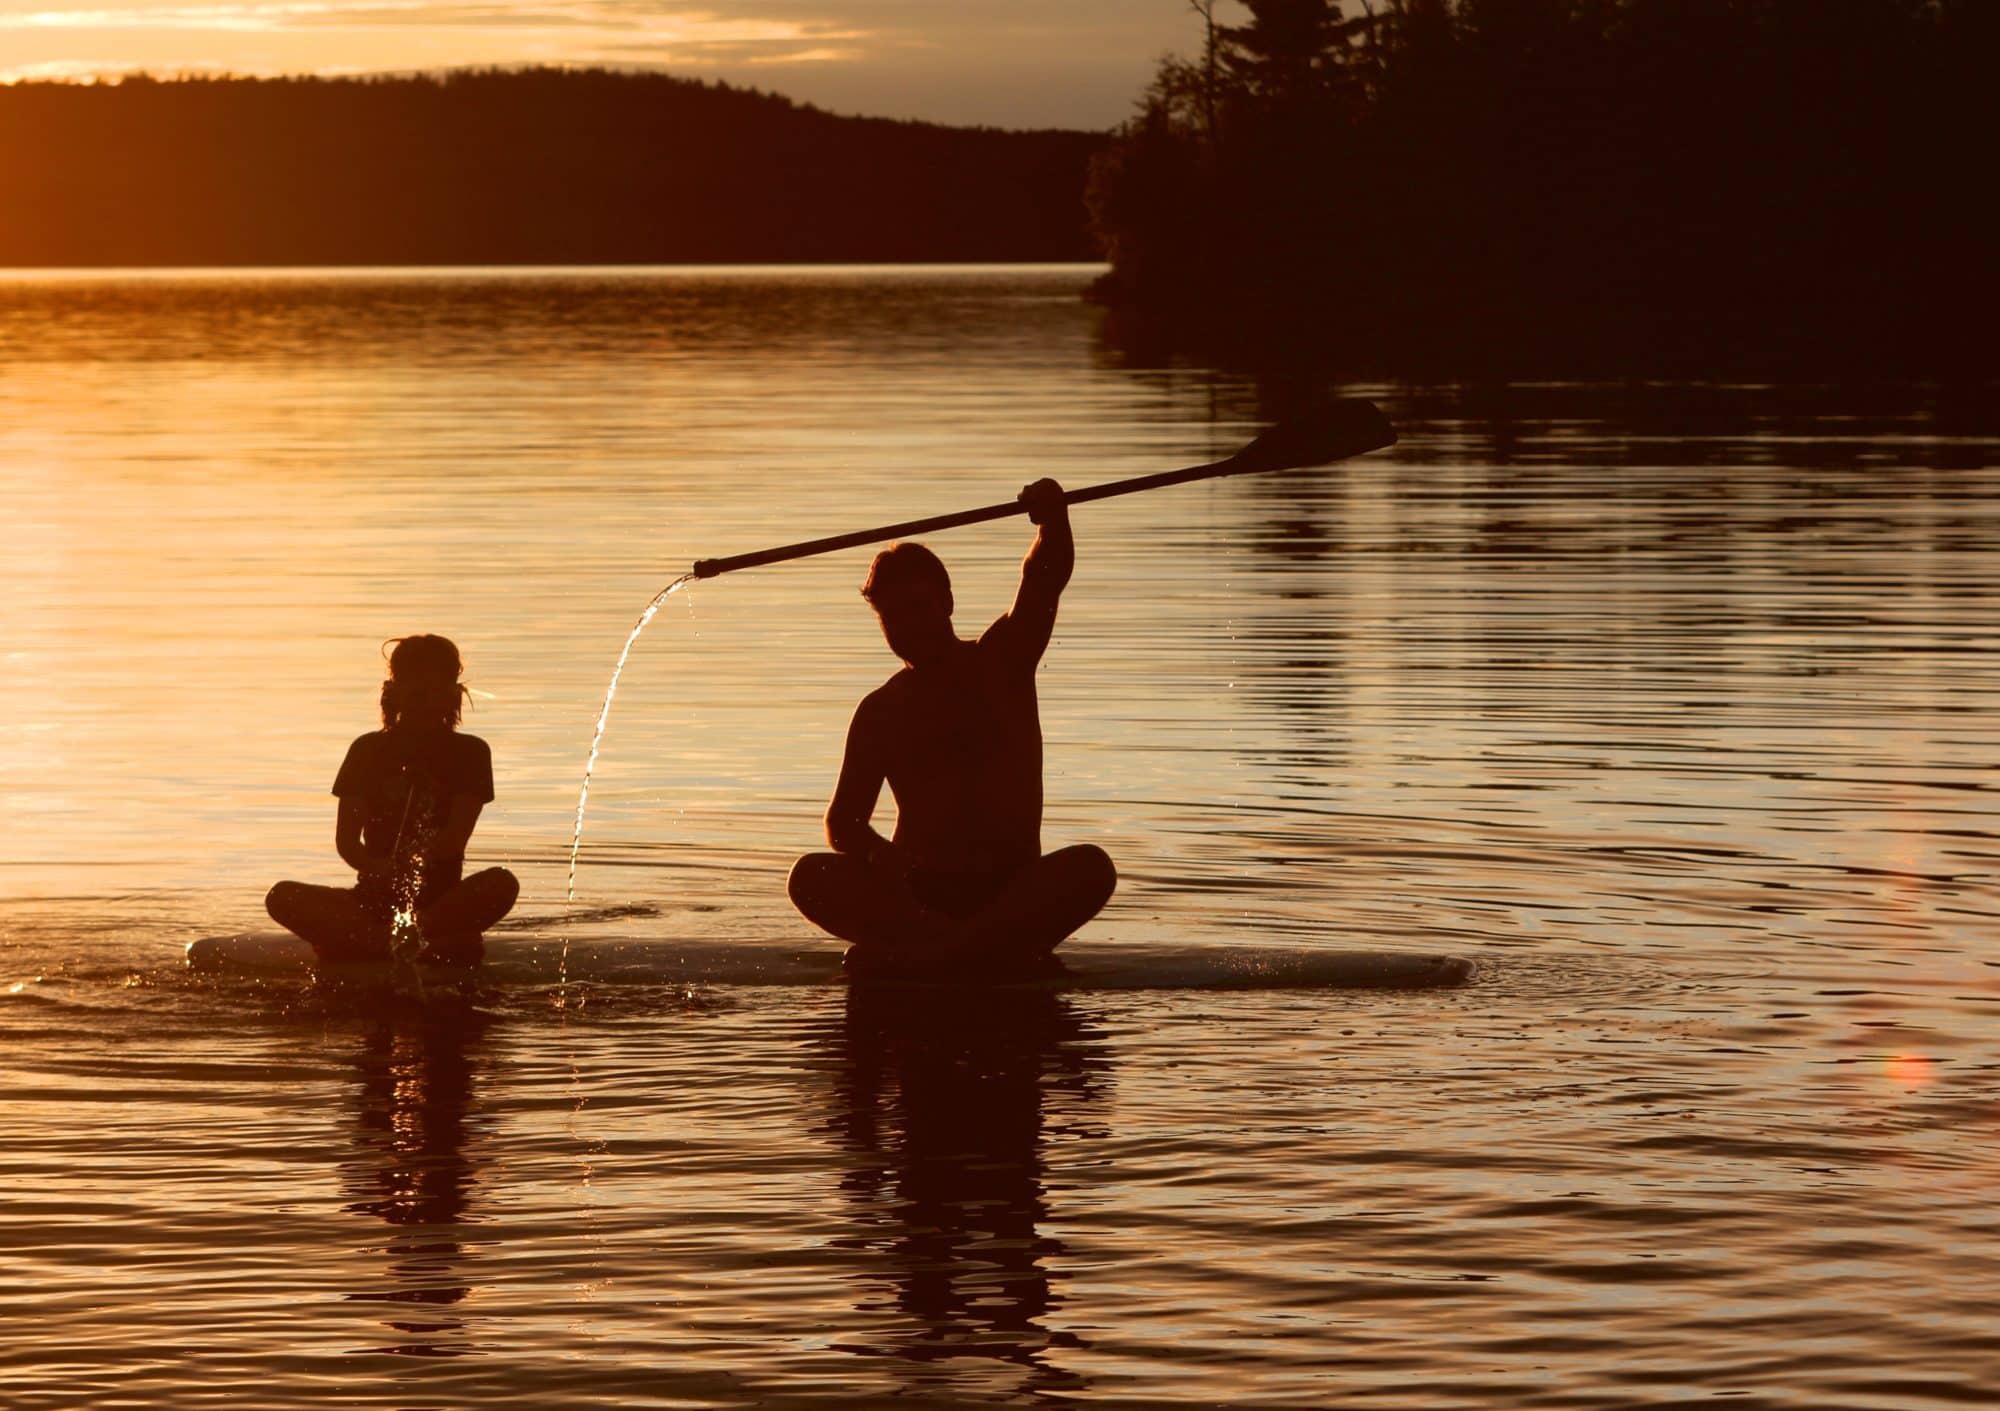 raising paddle against sunset sky